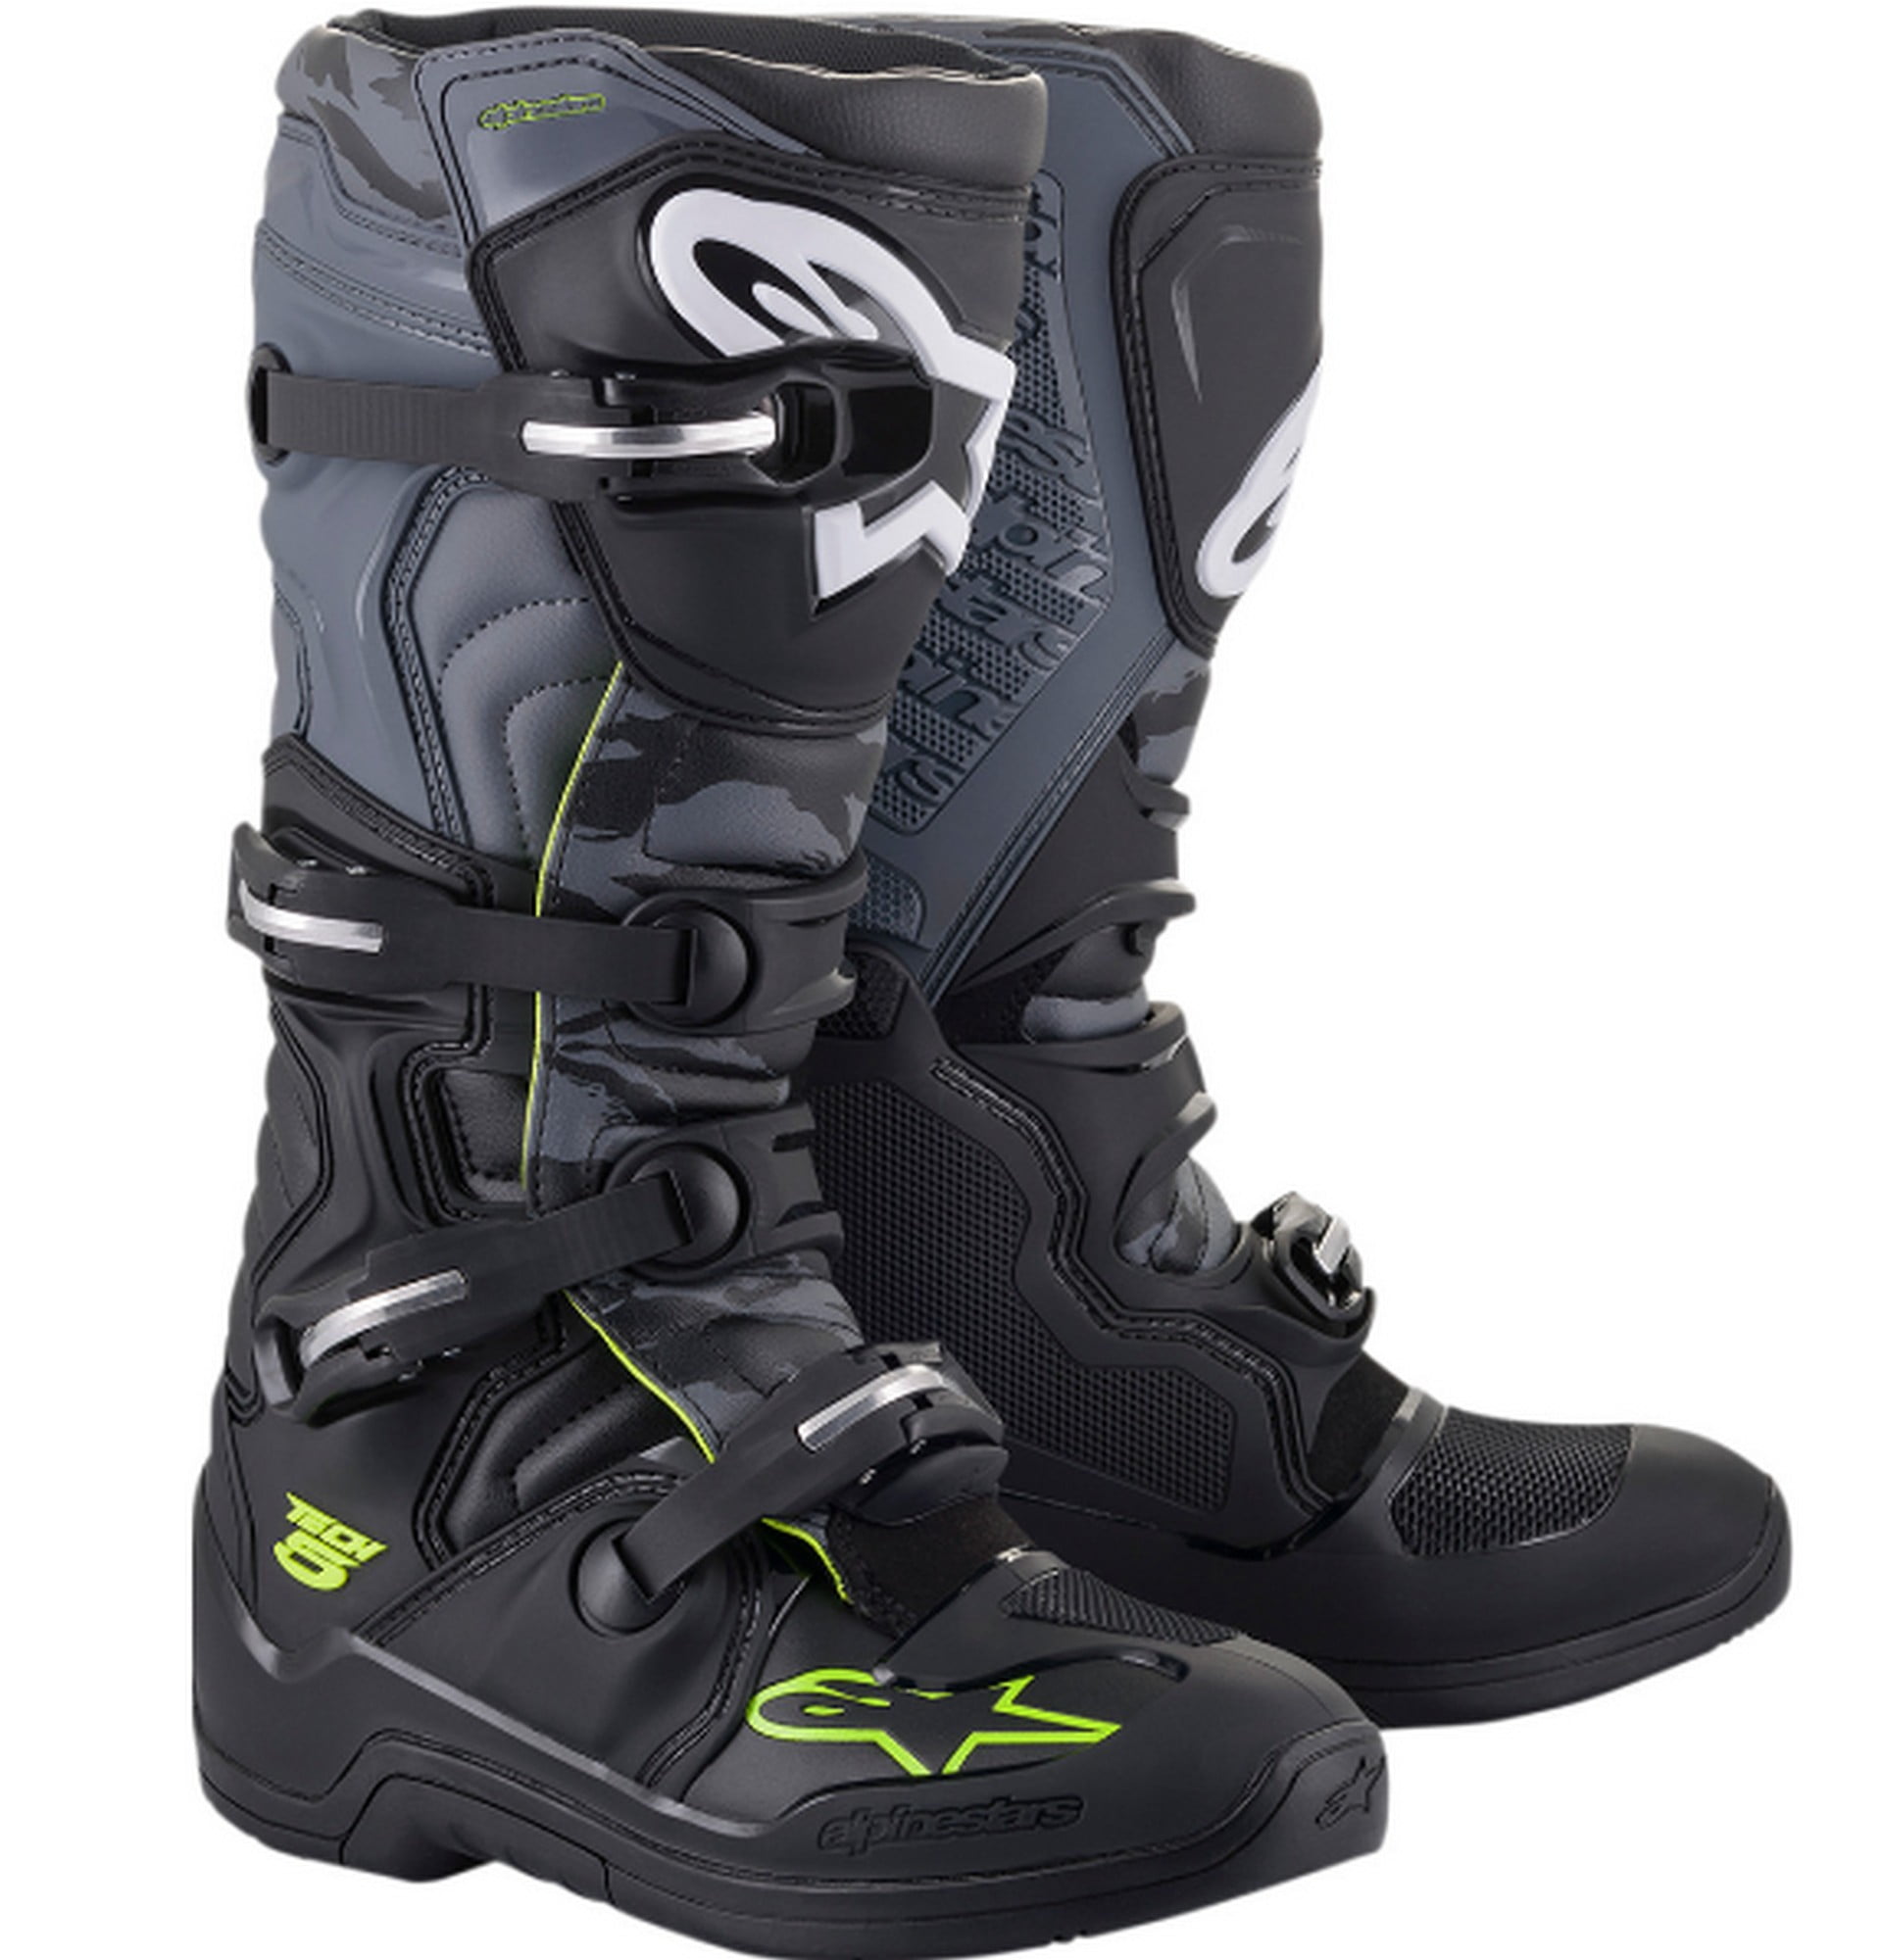 Alpinestars Tech 7 Boots-Red Flo/Cyan/Gray/Black-11